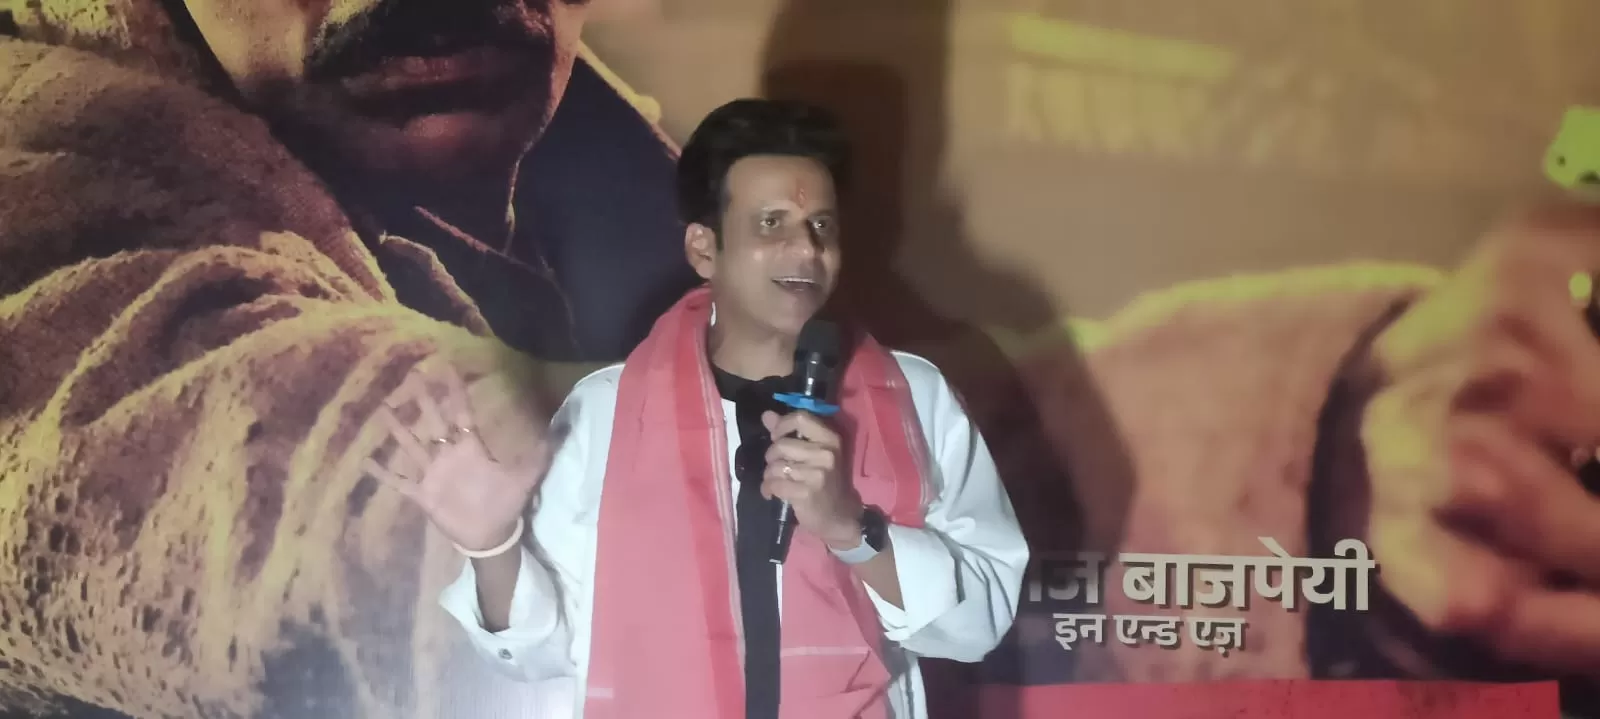 Actor Manoj Bajpayee : असल जिंदगी में राजनीति ना बाबा नाः मनोज बाजपेयी